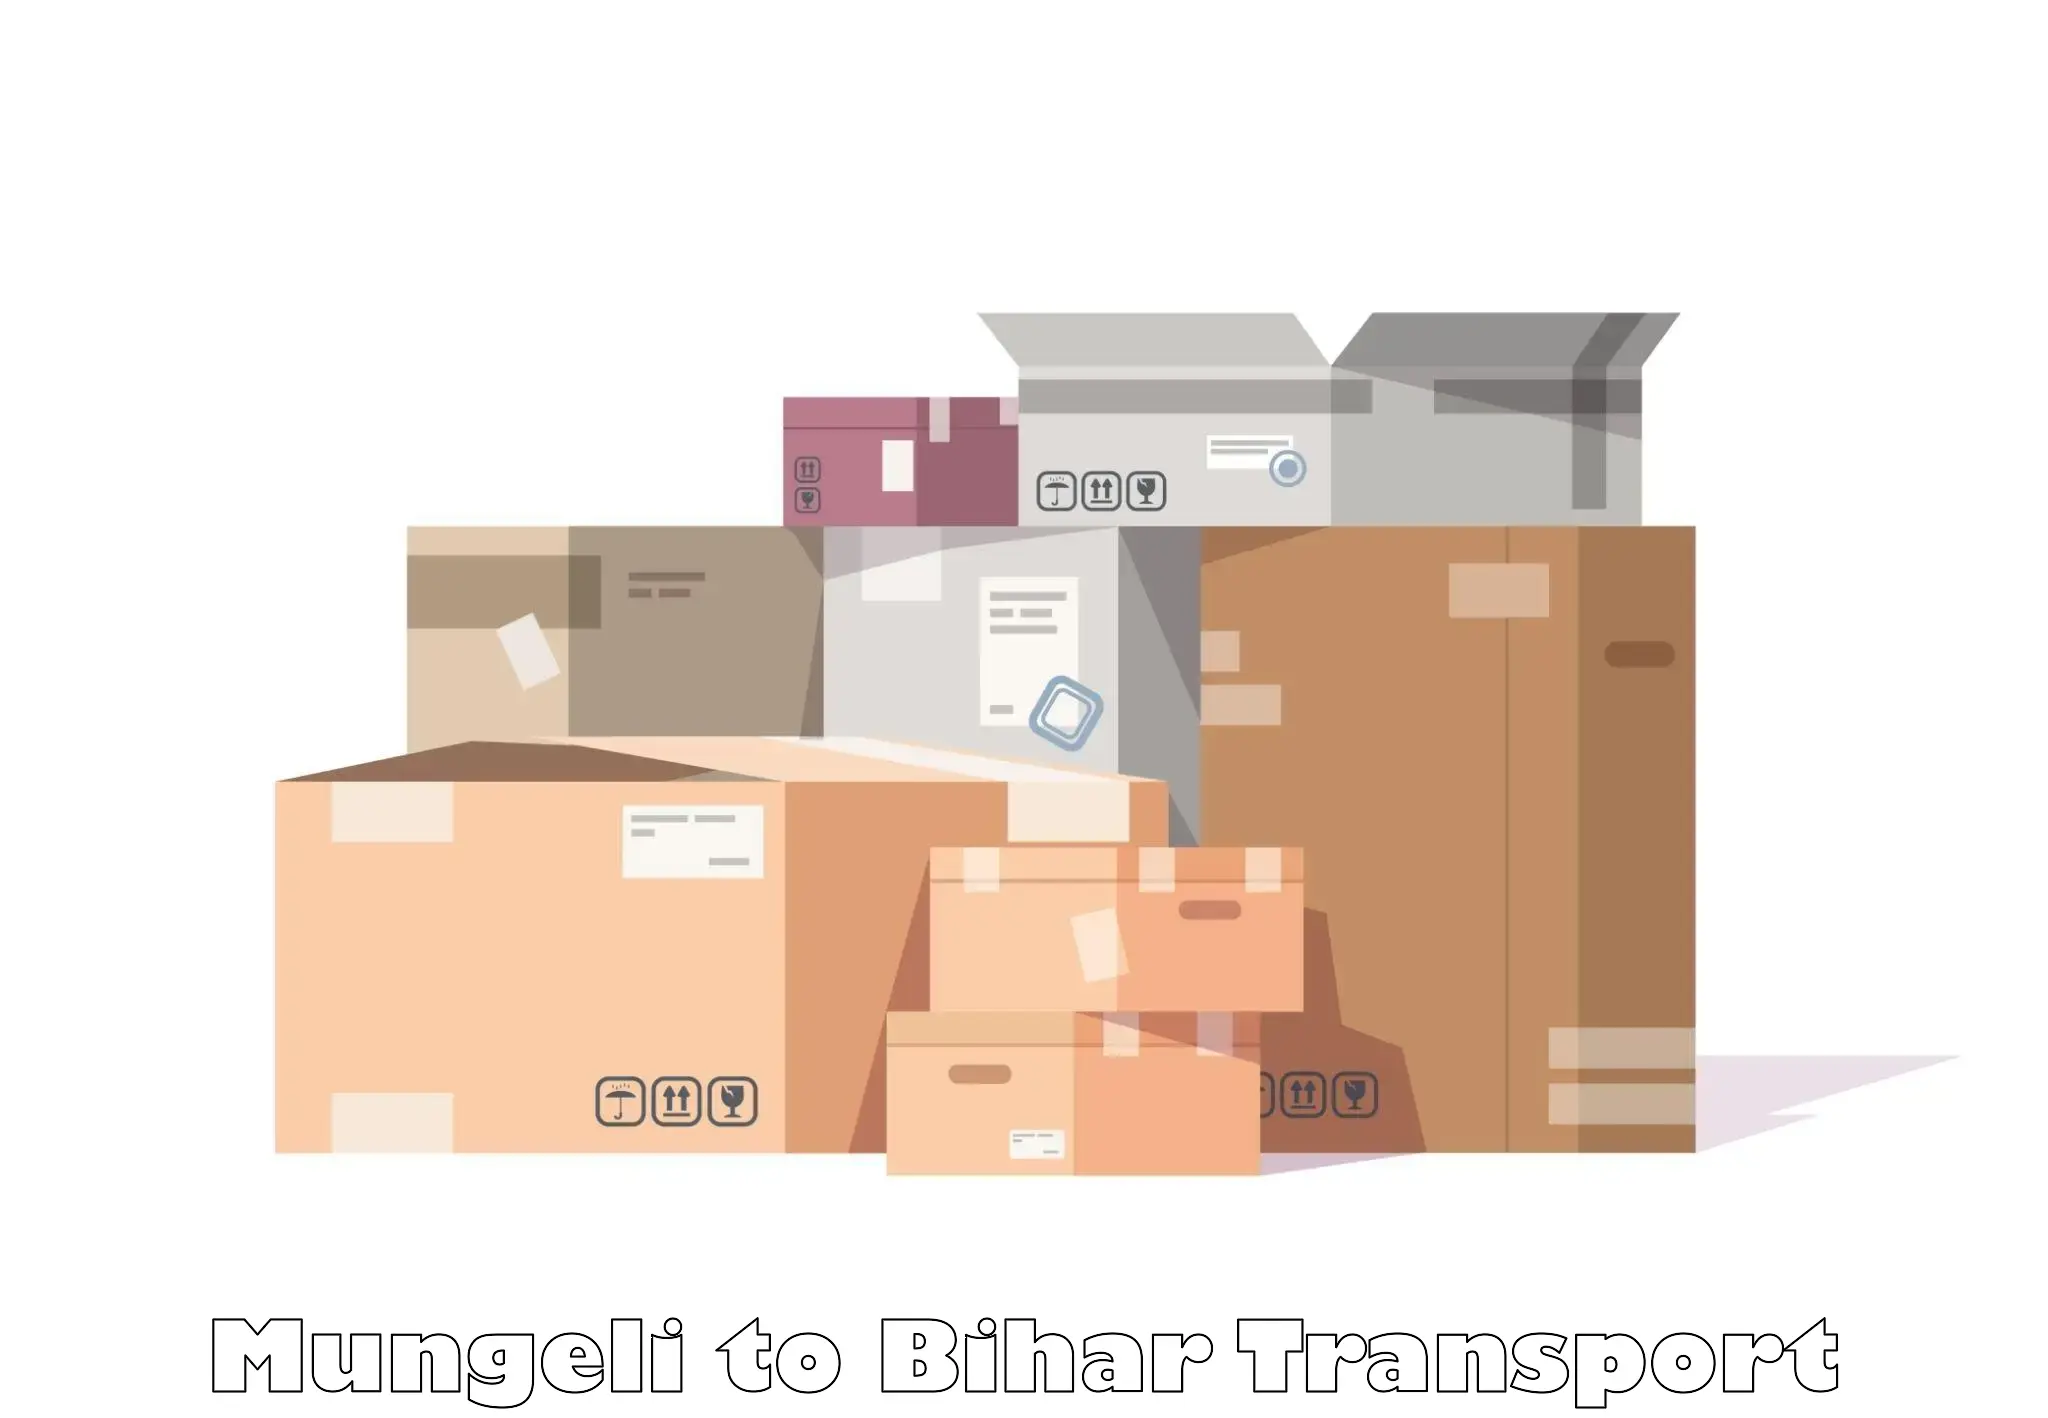 Transport in sharing in Mungeli to Katihar